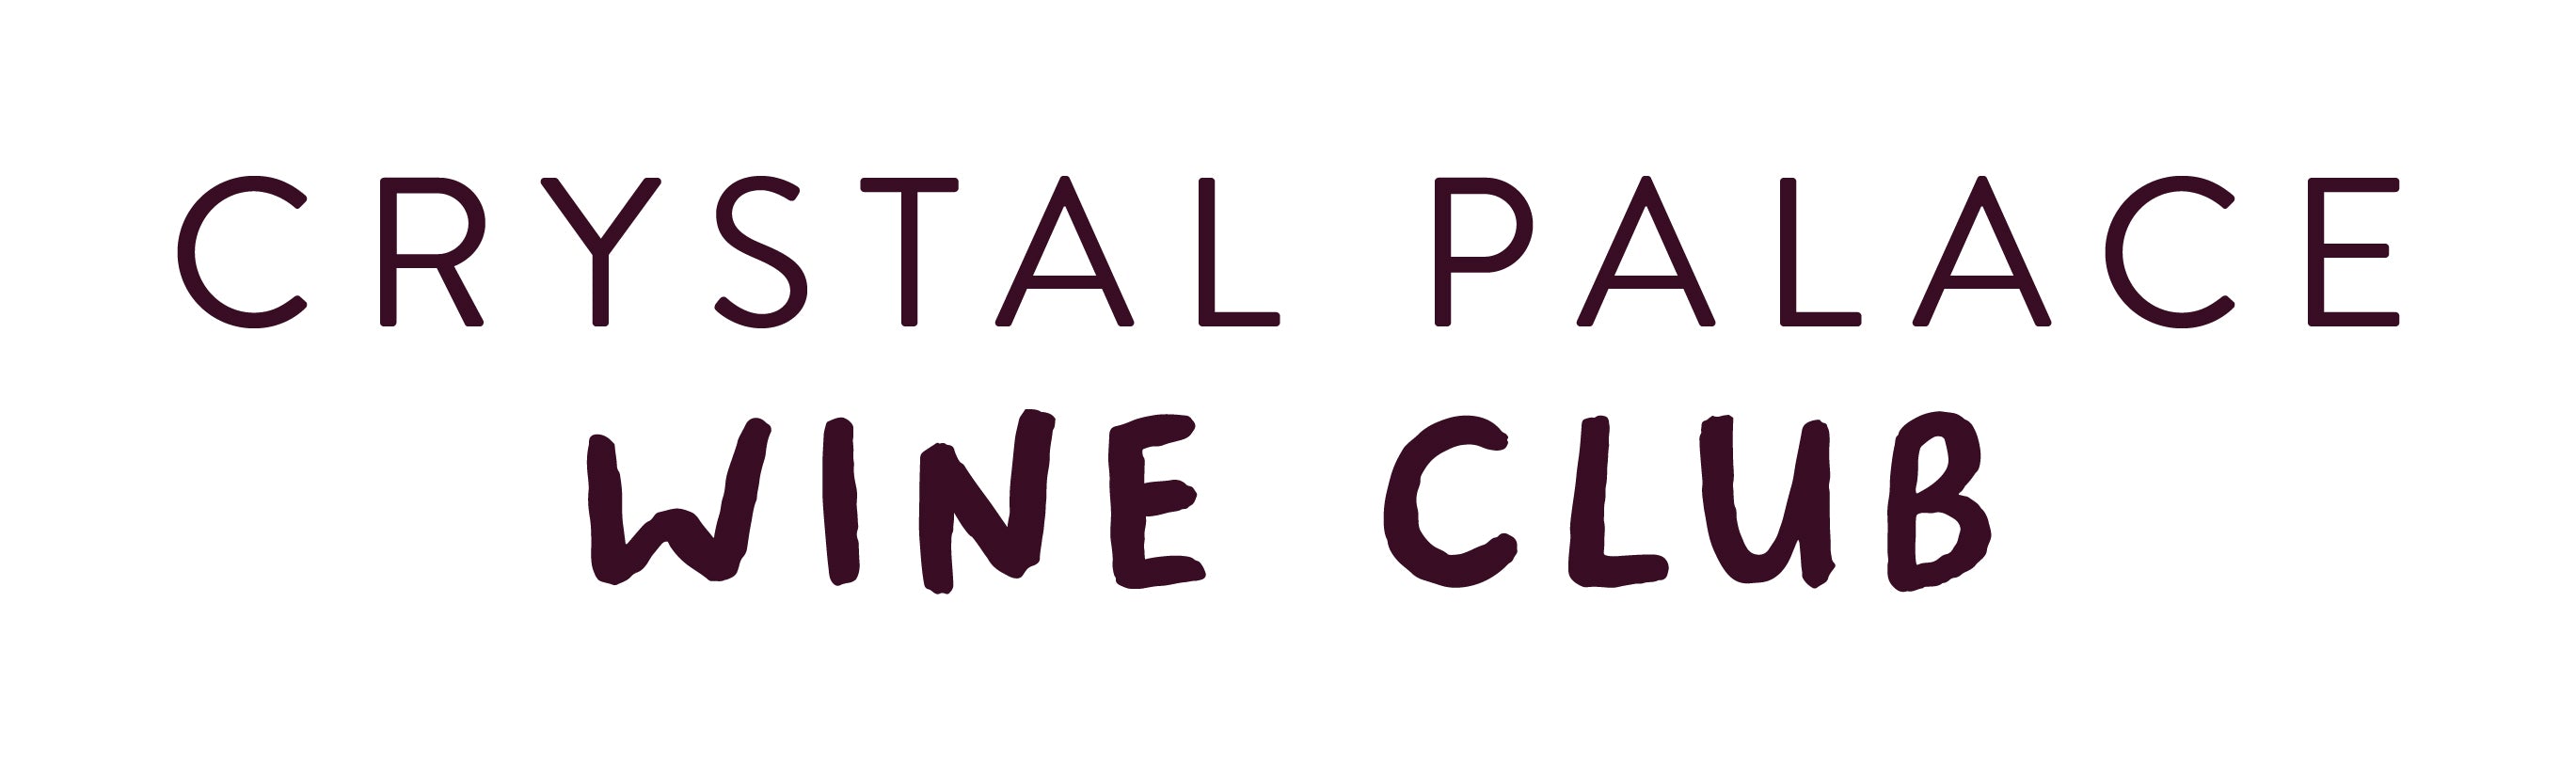 Crystal Palace Wine Club